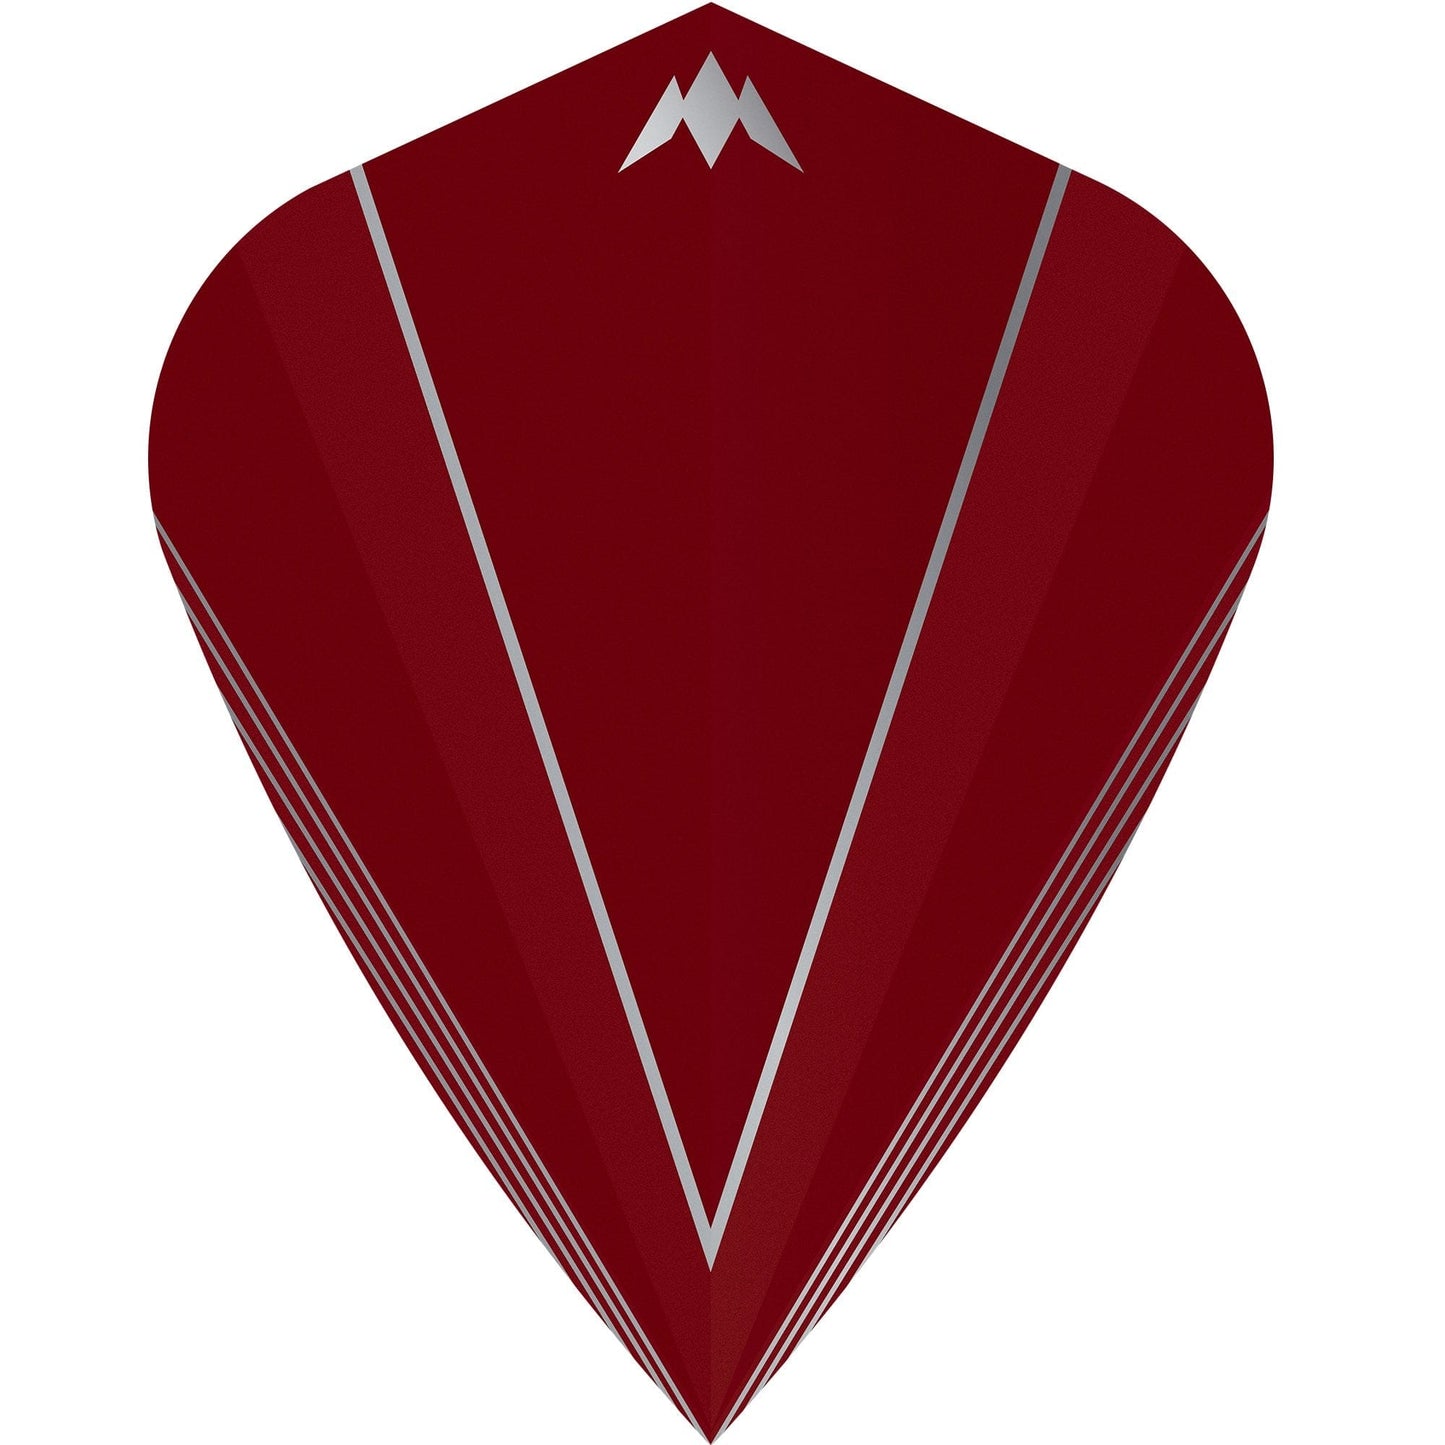 Mission Shades Dart Flights - 100 Micron - Kite Red